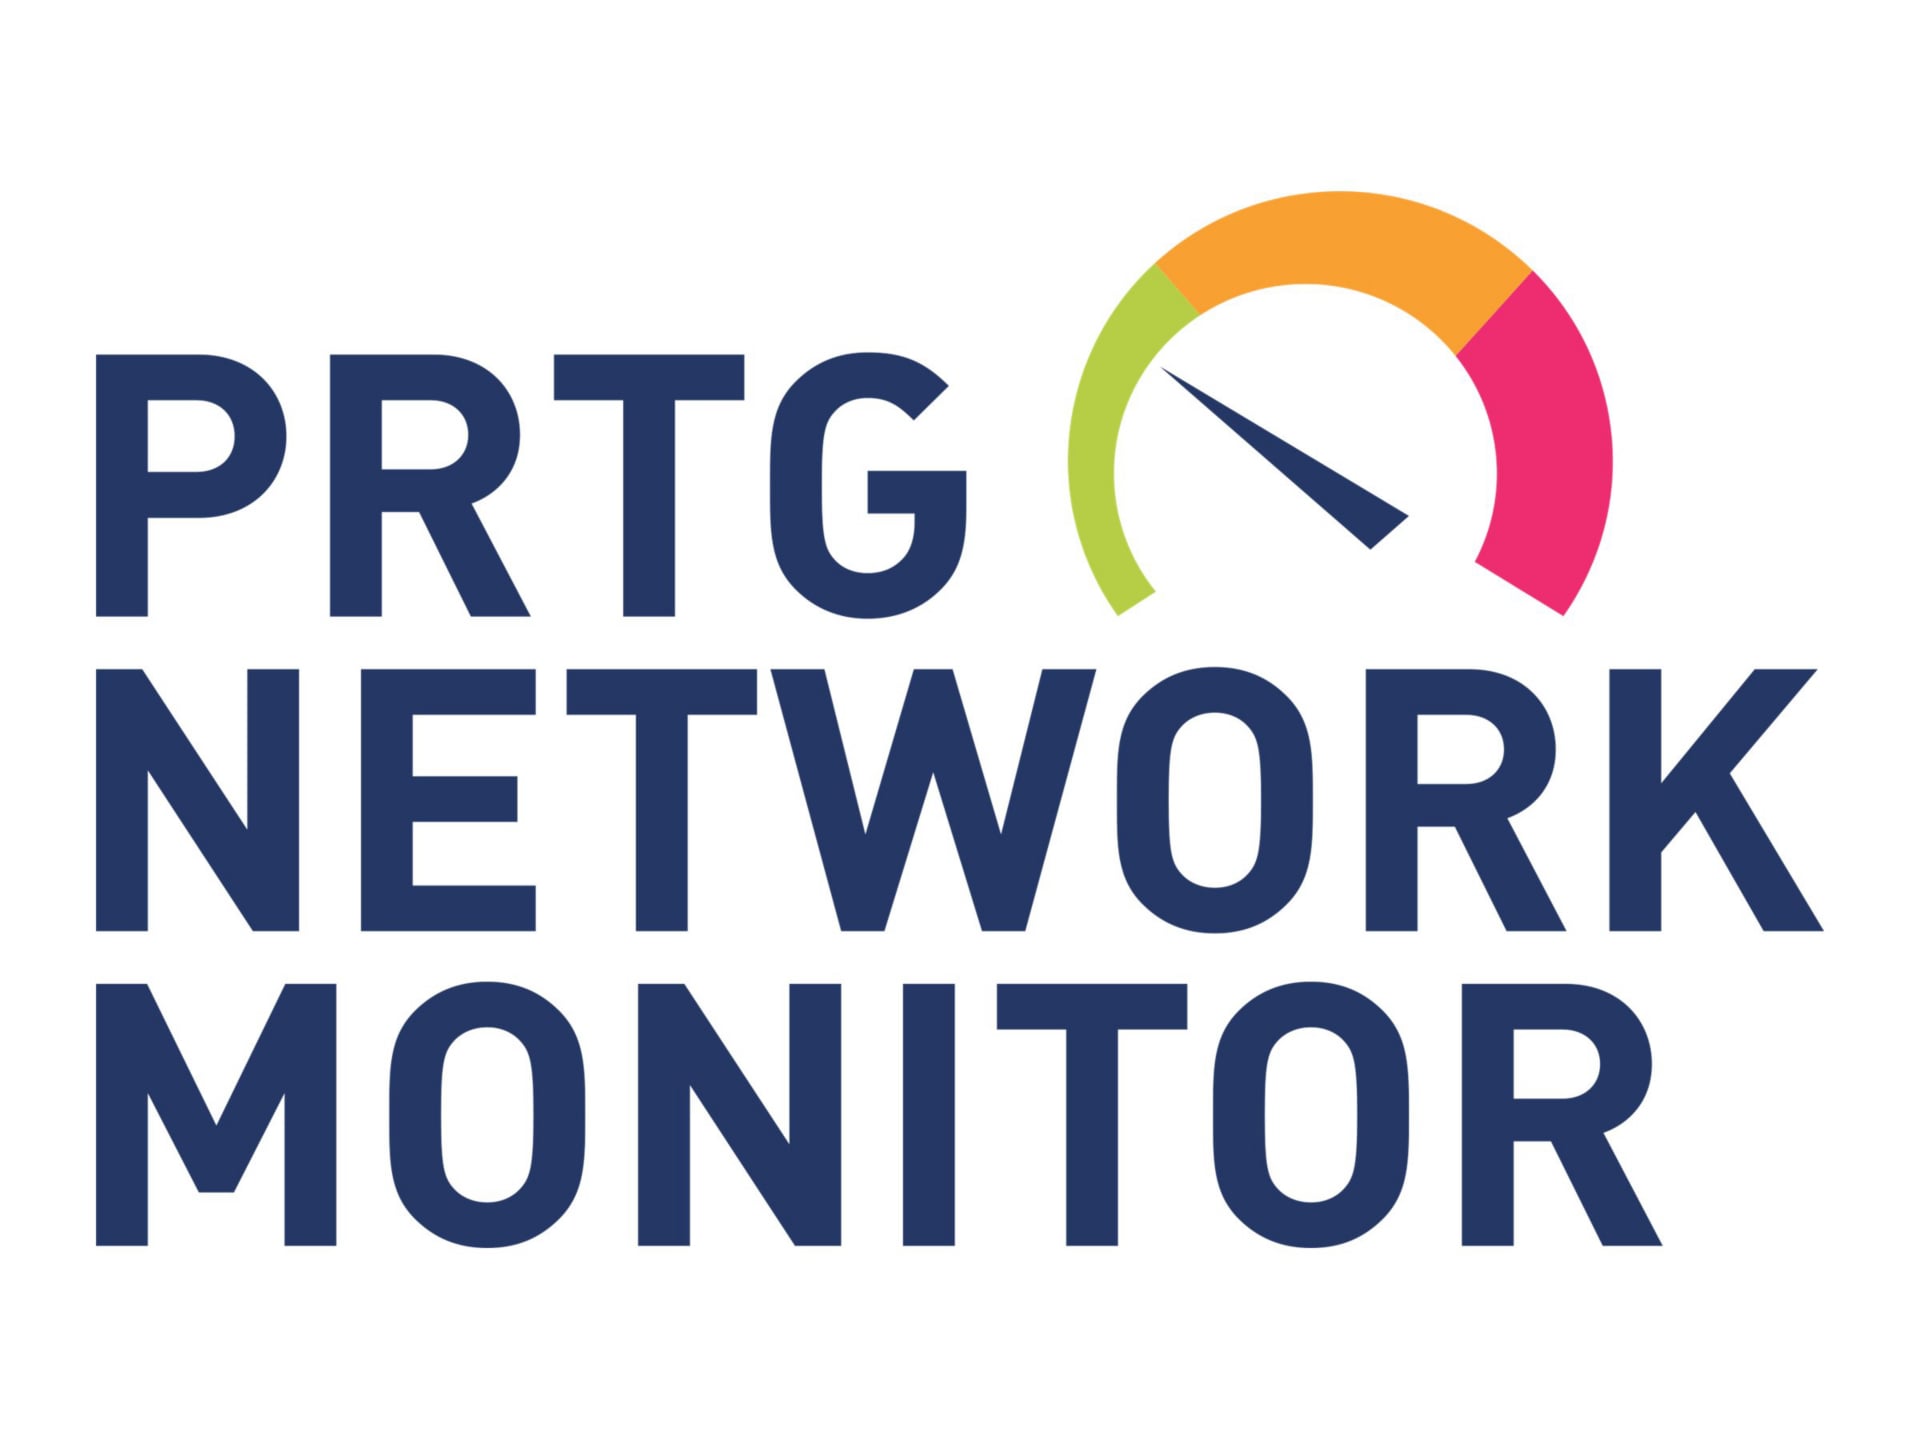 PRTG Network Monitor XL1 - maintenance (5 years) - unlimited sensors, 1 ser